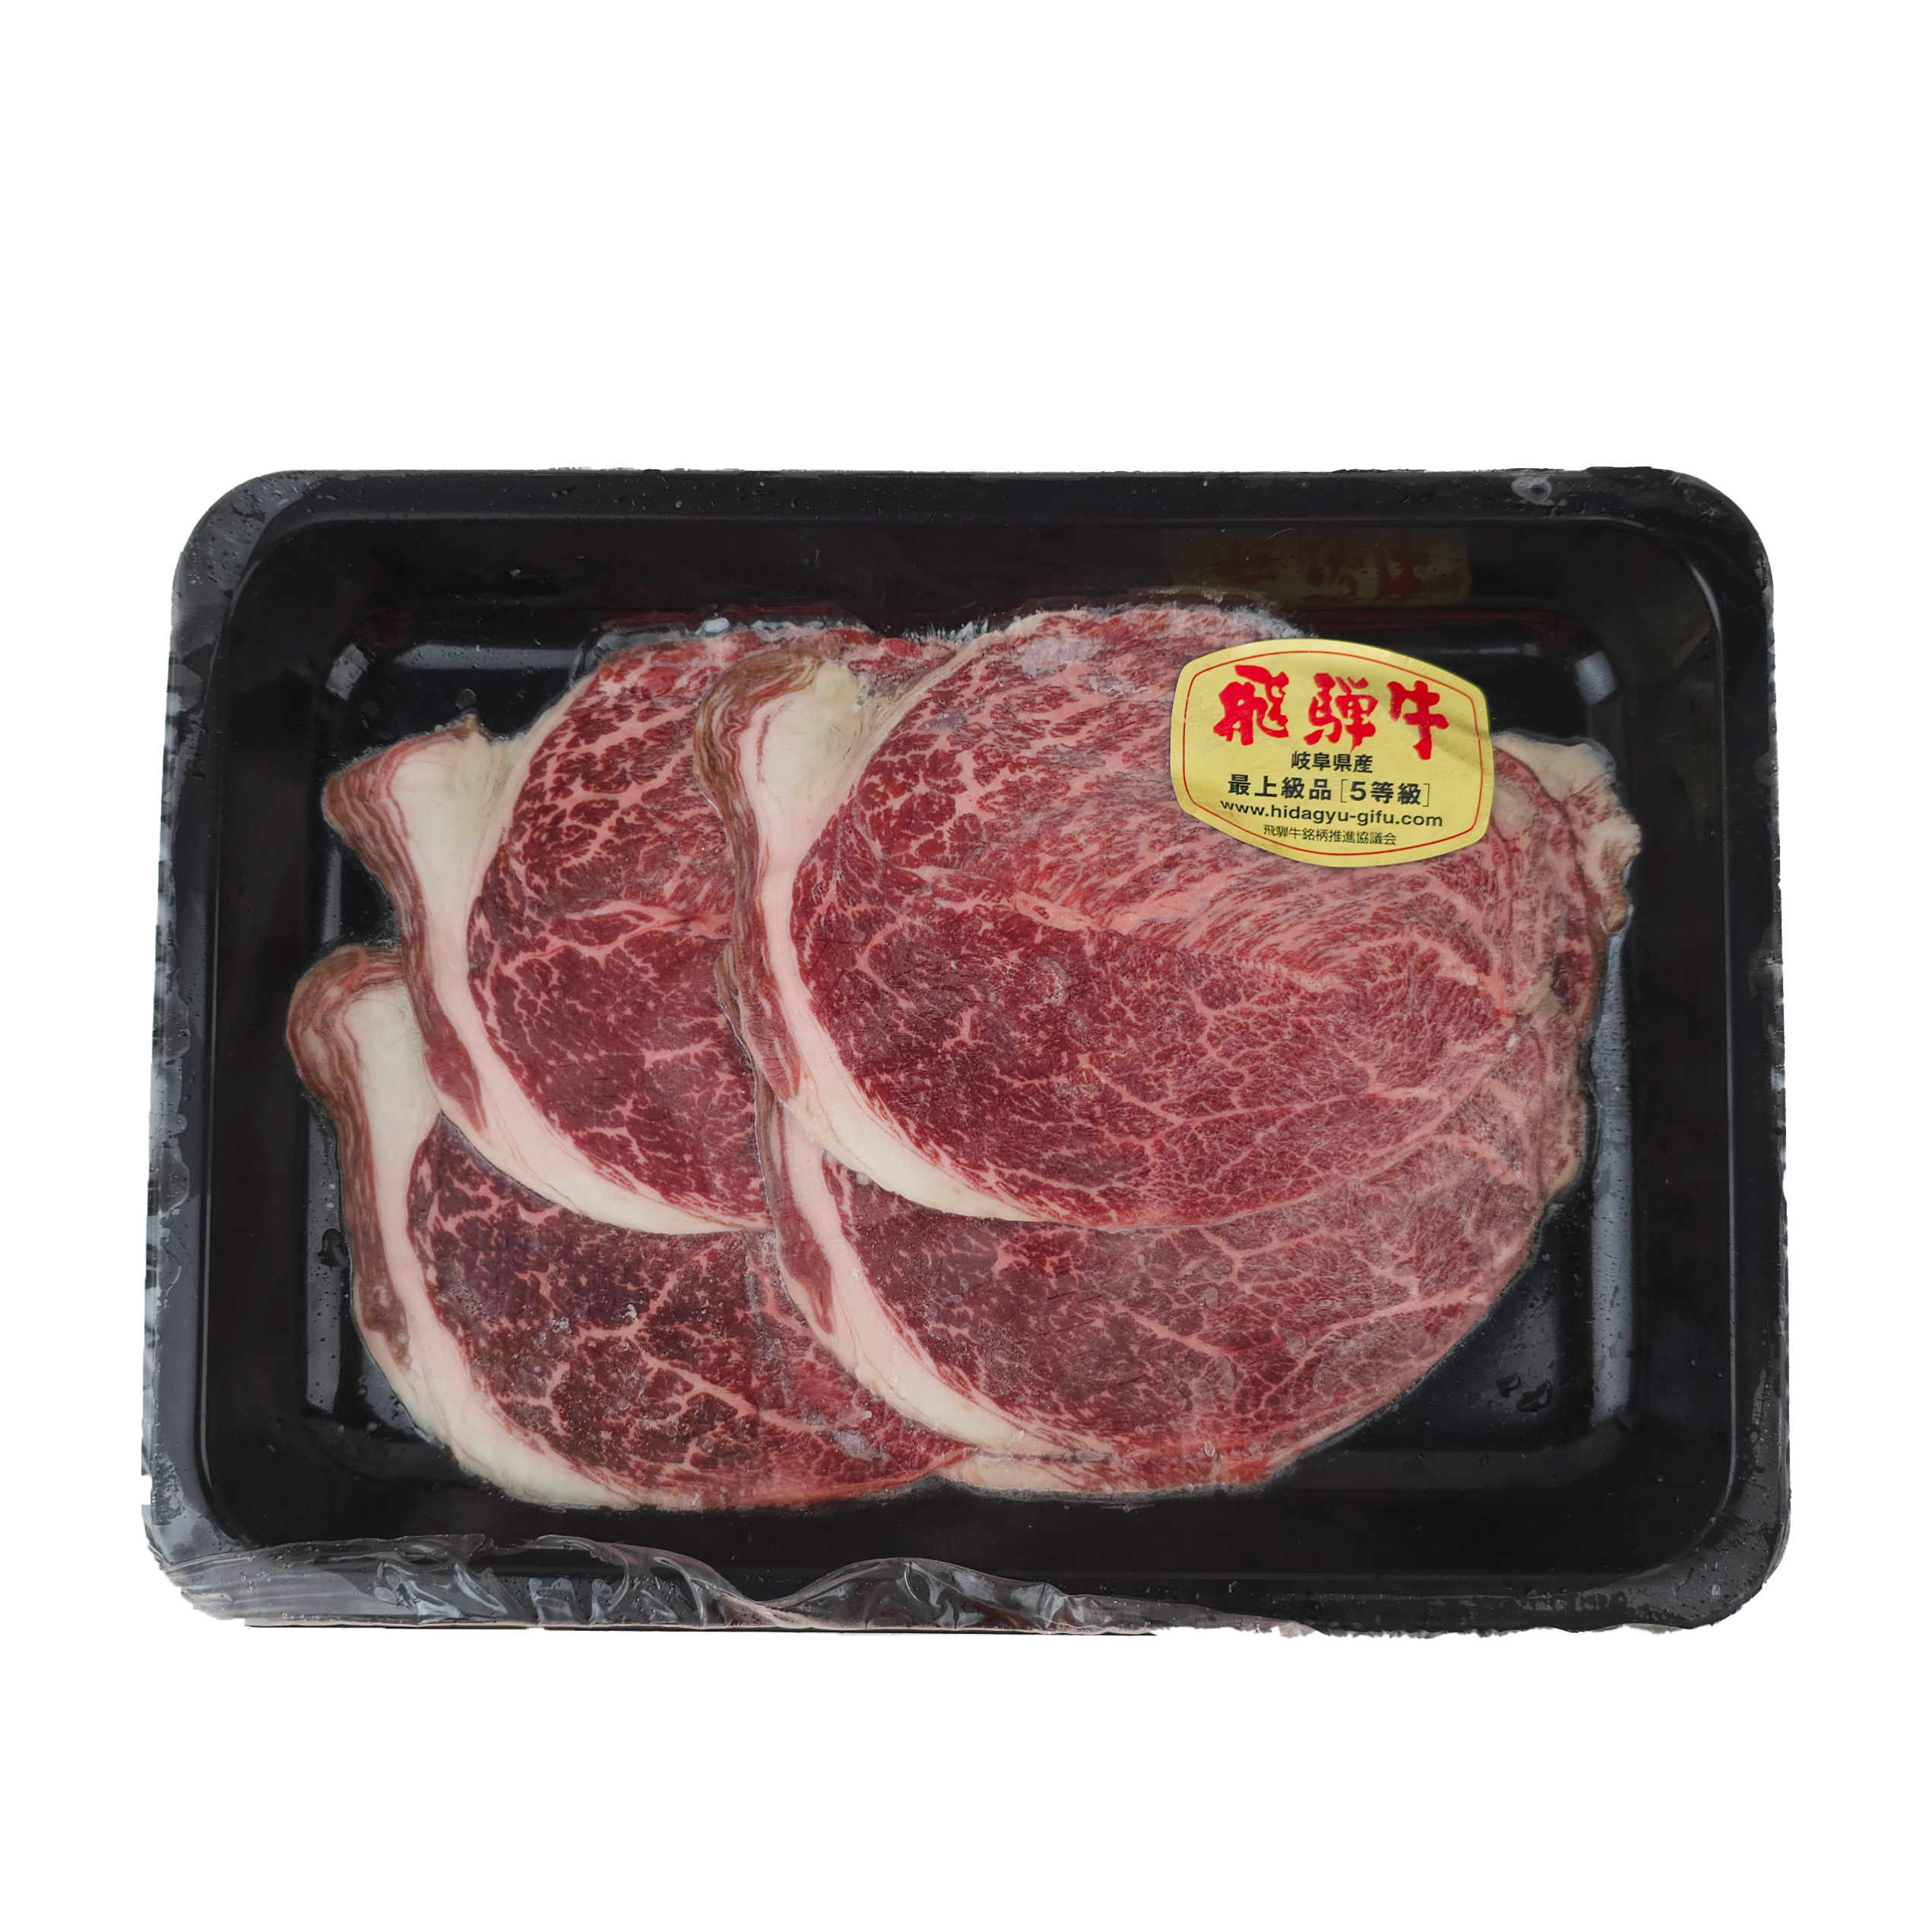 Hida Premium A5 Wagyu Beef Top Side Slice 150g-eBest-Beef,Meat deli & eggs